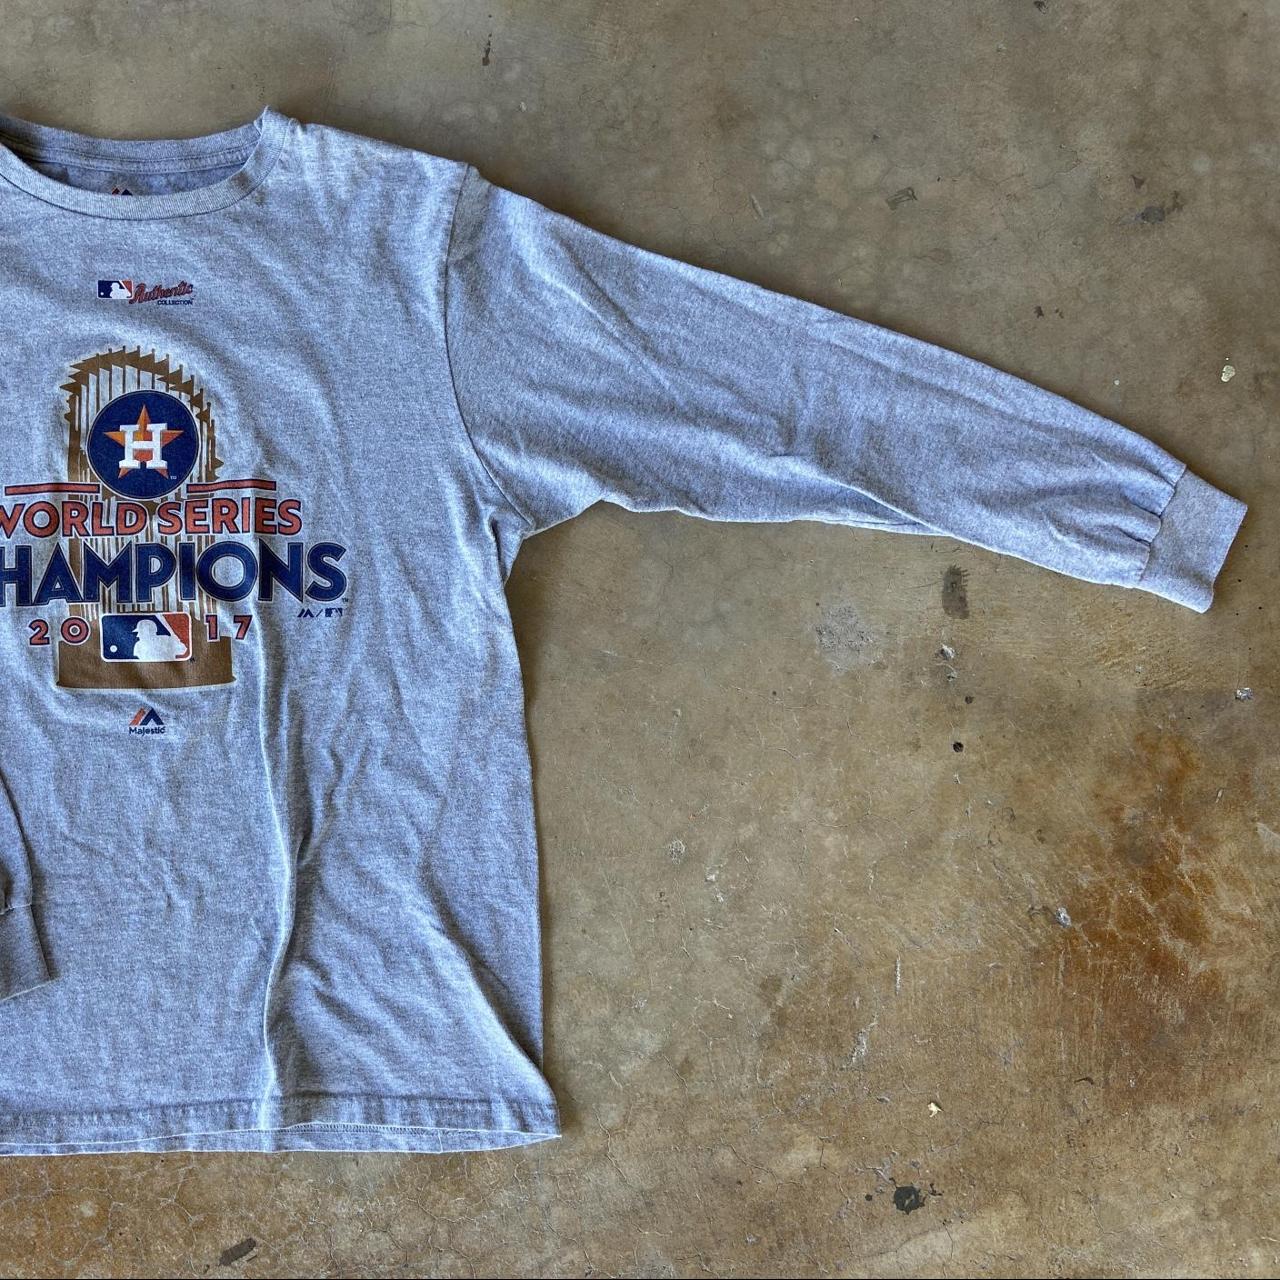 2017 Houston Astros World Series Shirt Authentic - Depop